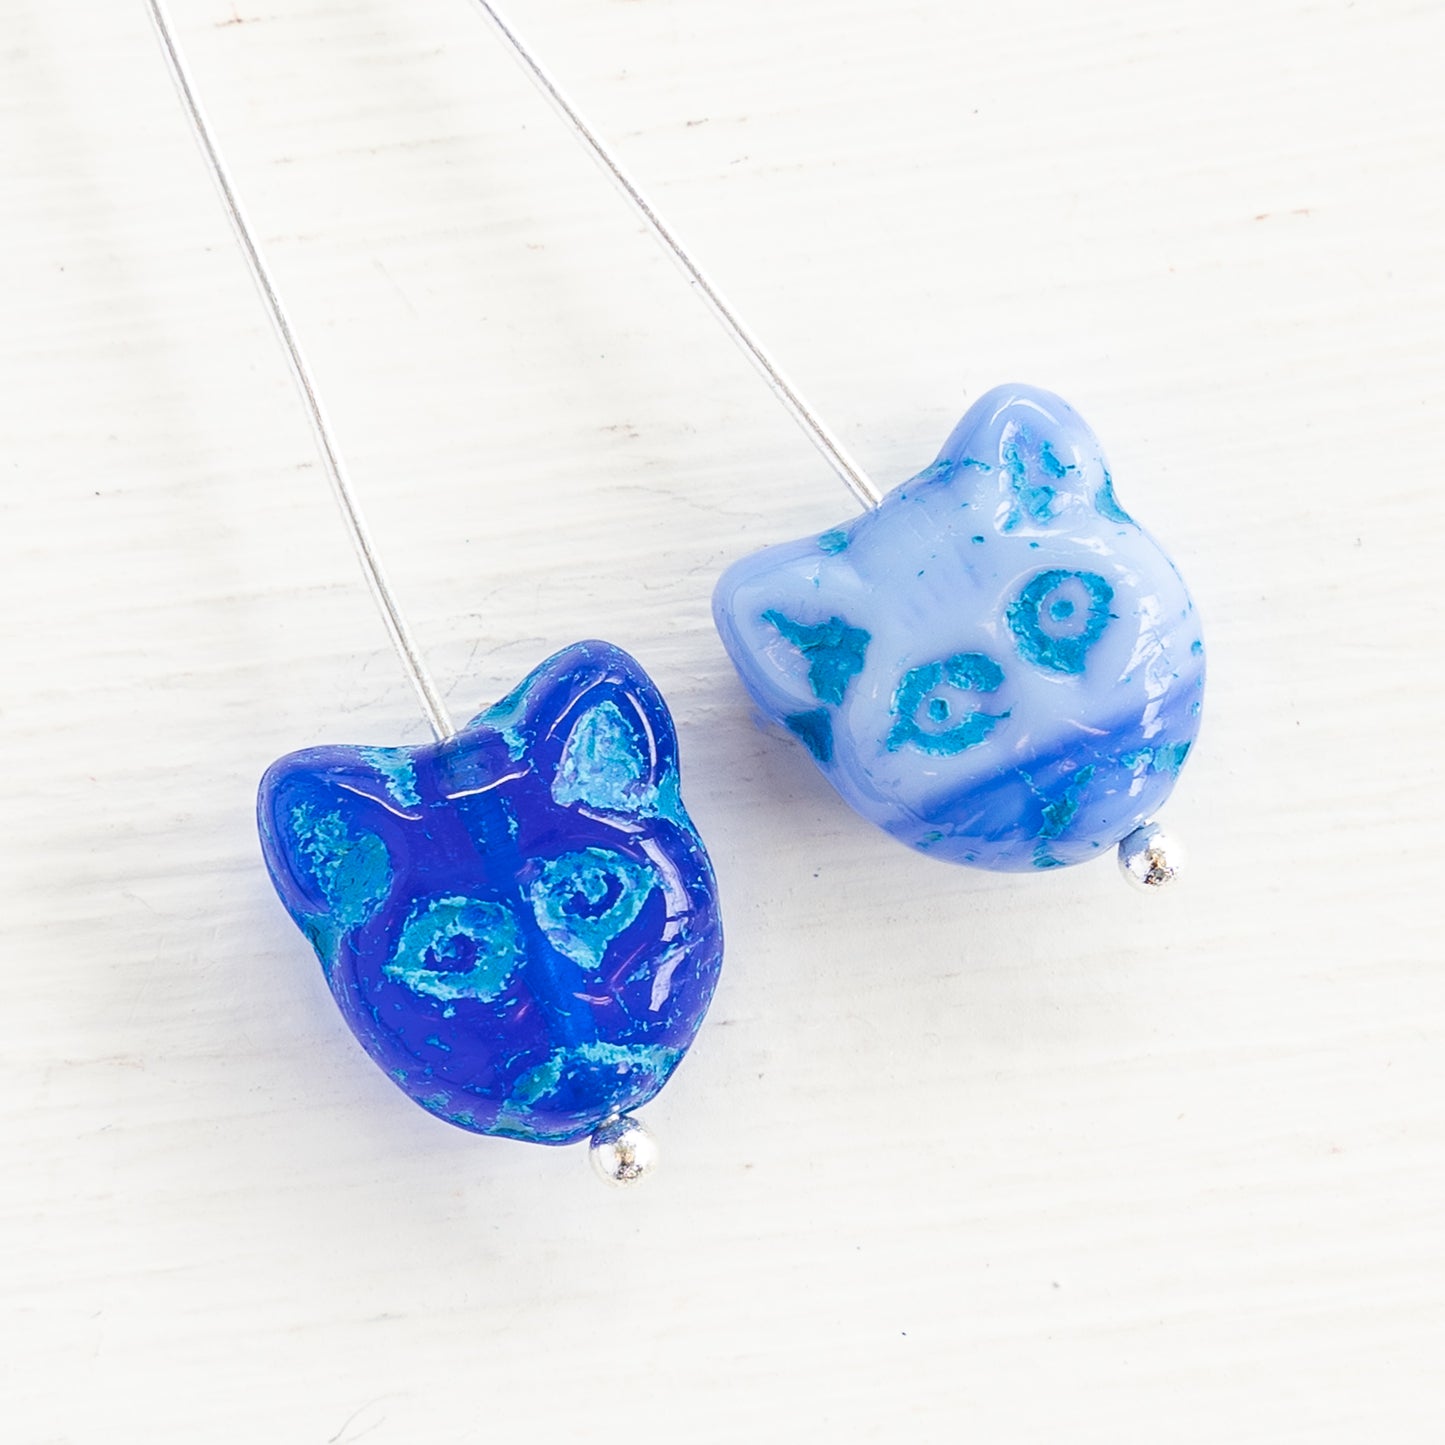 12mm Glass Cat Beads - Blue Mix with Aqua Wash - 10 Beads